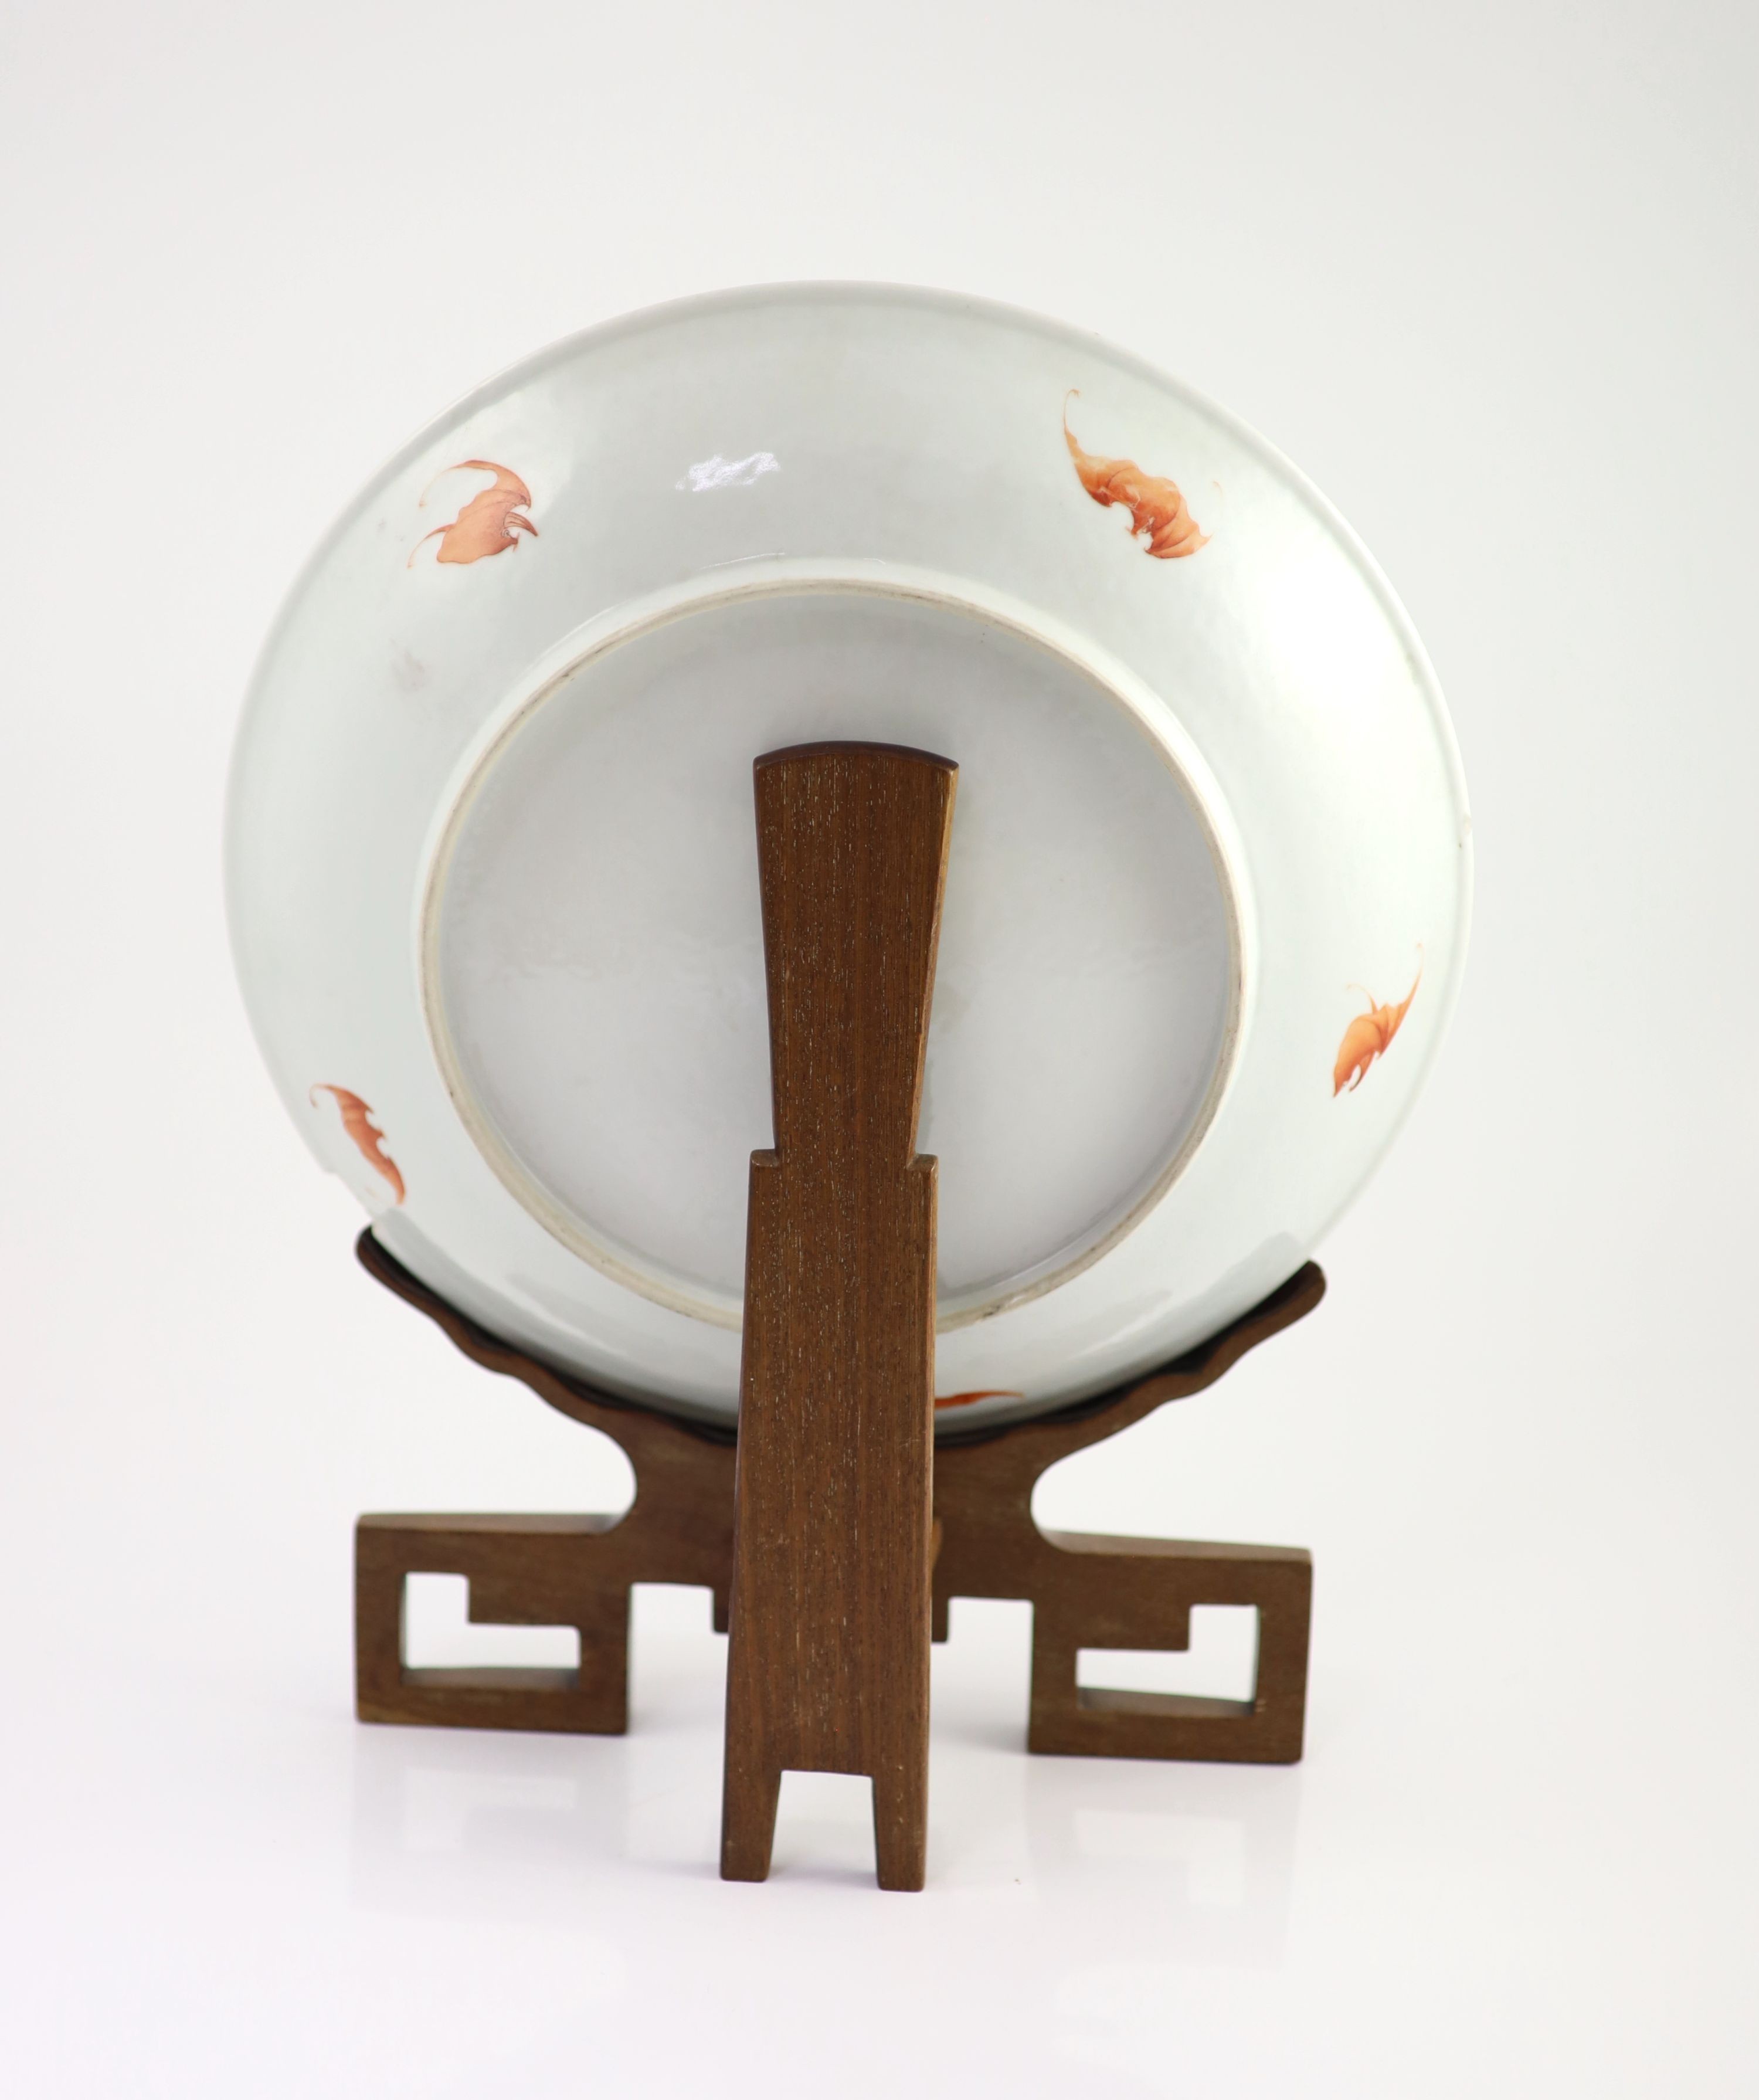 A Chinese Republic period enamelled porcelain 'crane' dish, four-character Jing Yuan Tang Zhi mark, 34.3cm diameter, rim chip